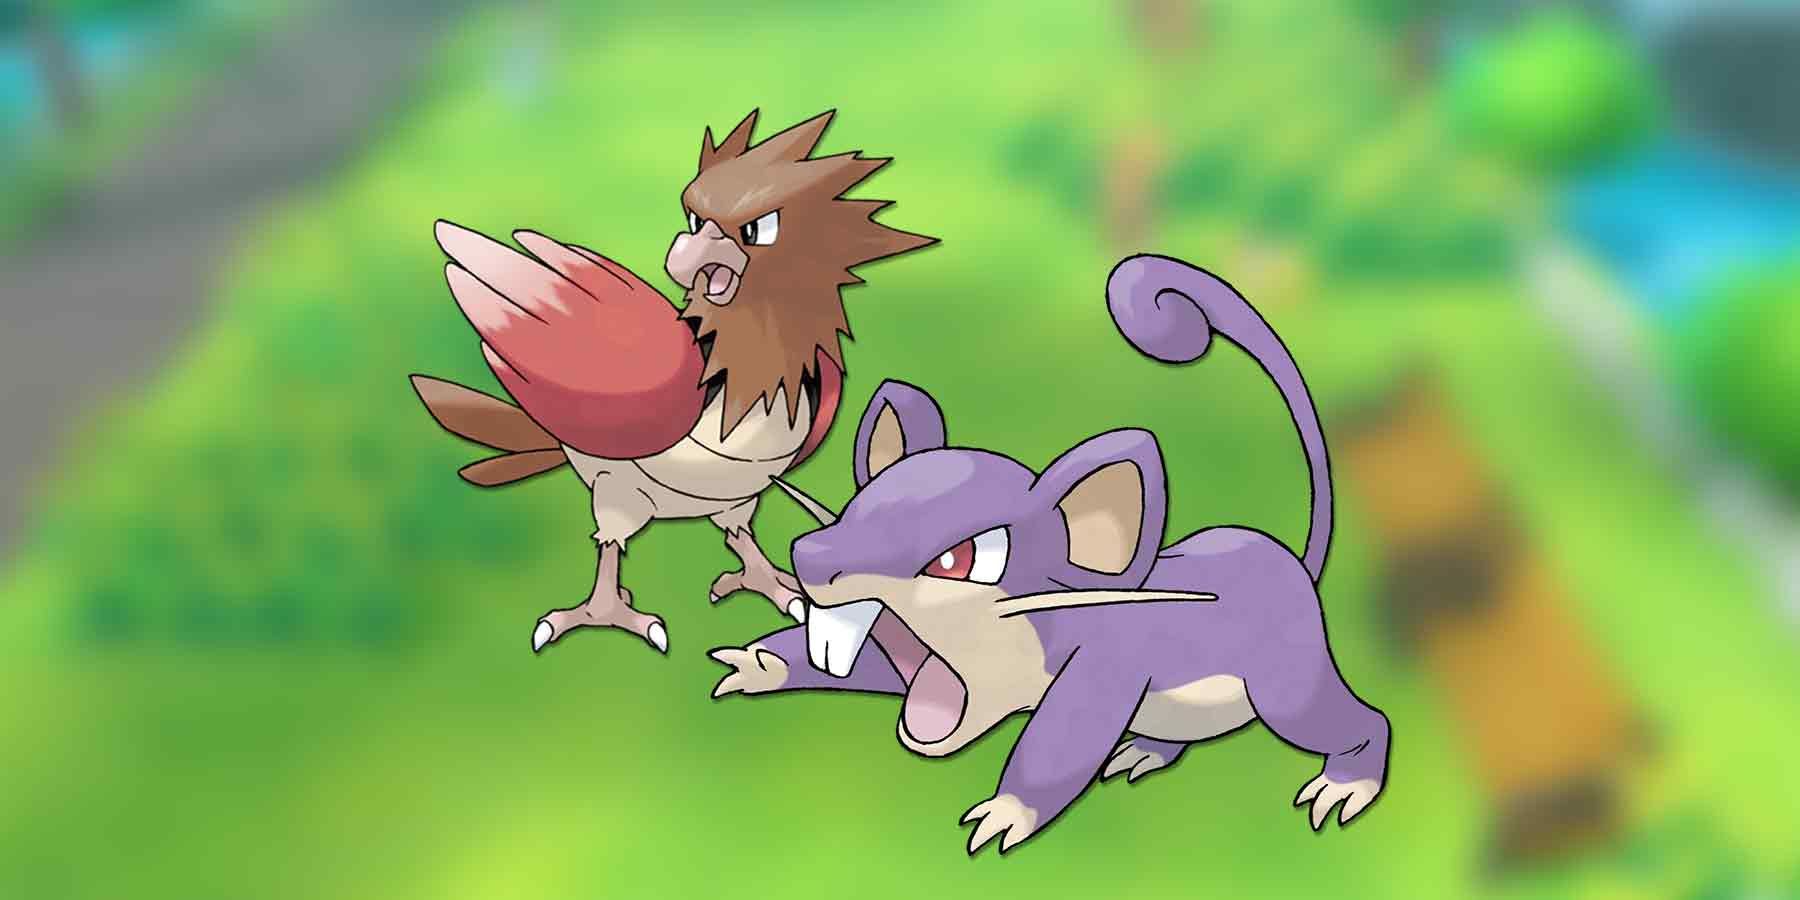 Rattata and Spearow sprites on blurred Pokemon overworld background